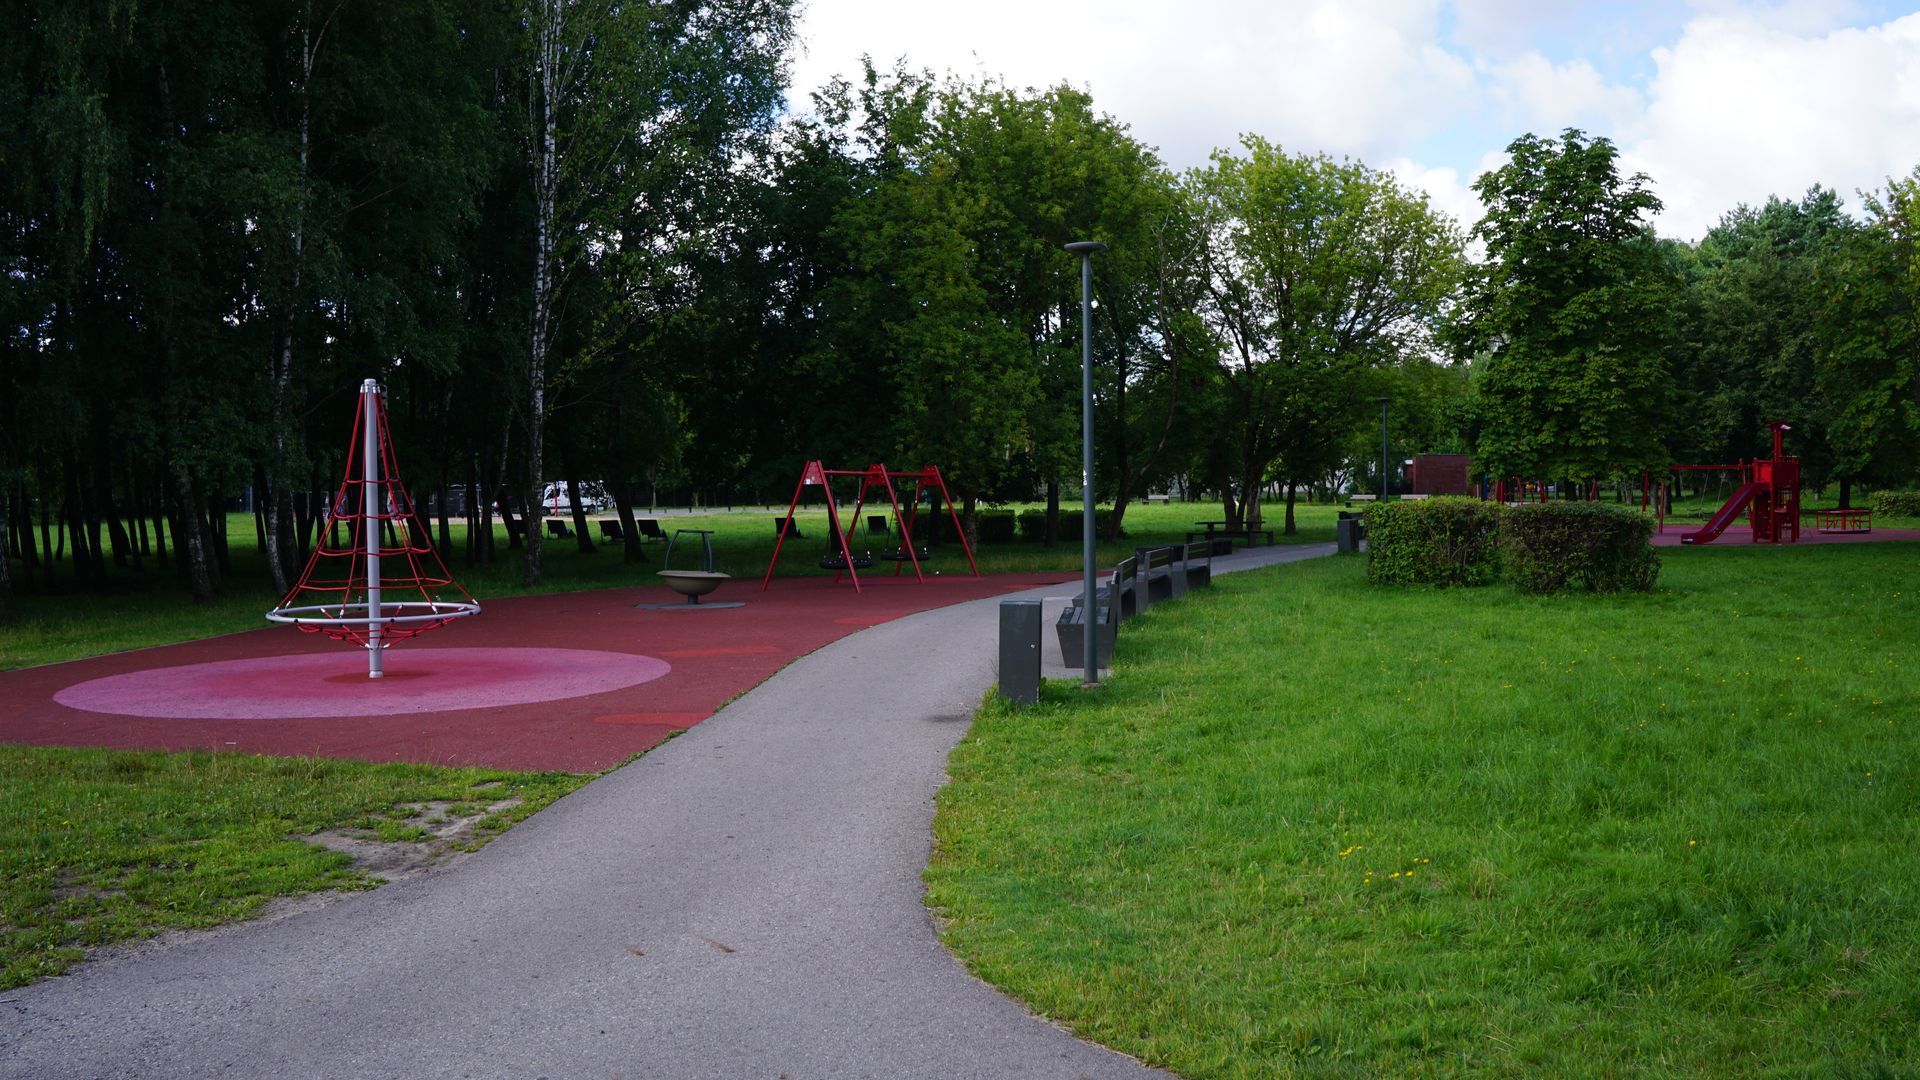 Kaunas Friendship Park